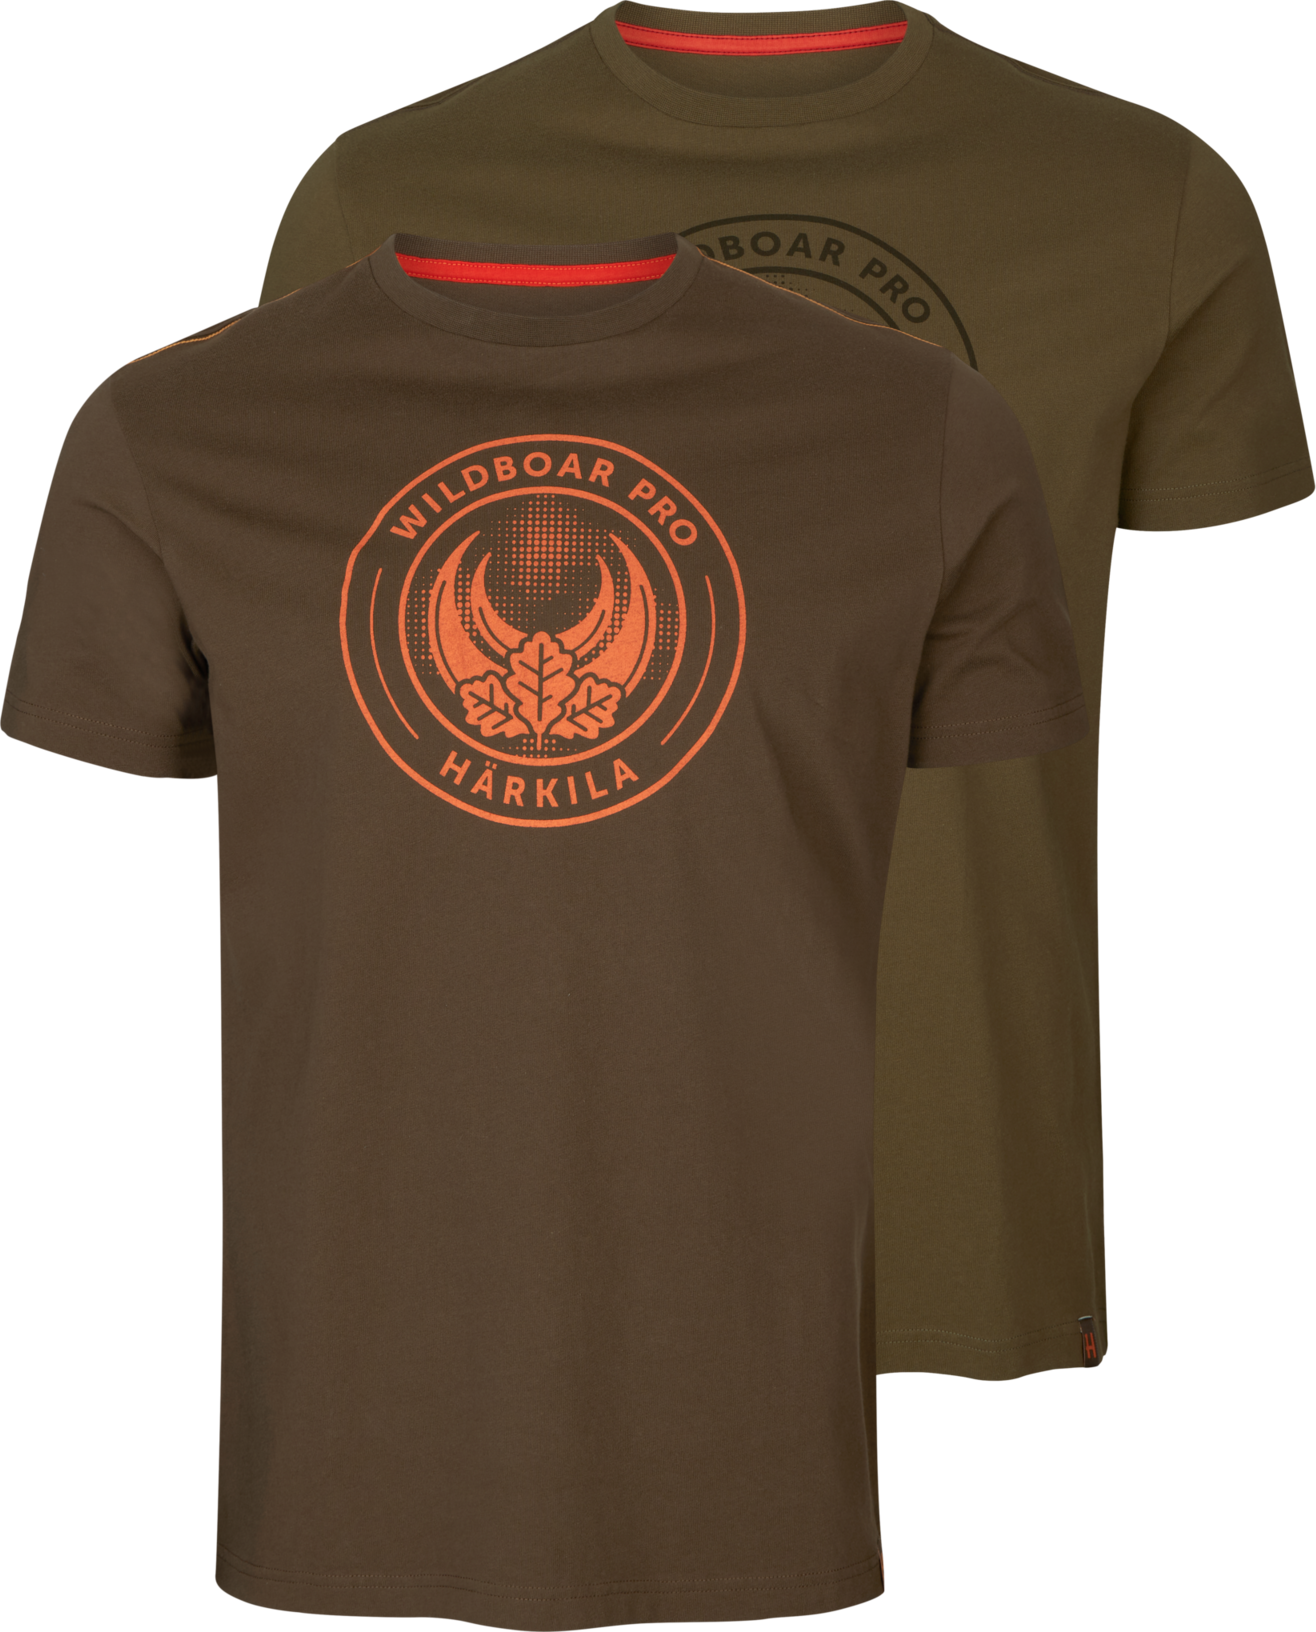 Men's Wildboar Pro Short Sleeve T-Shirt 2-Pack Light willow green/Demitasse brown